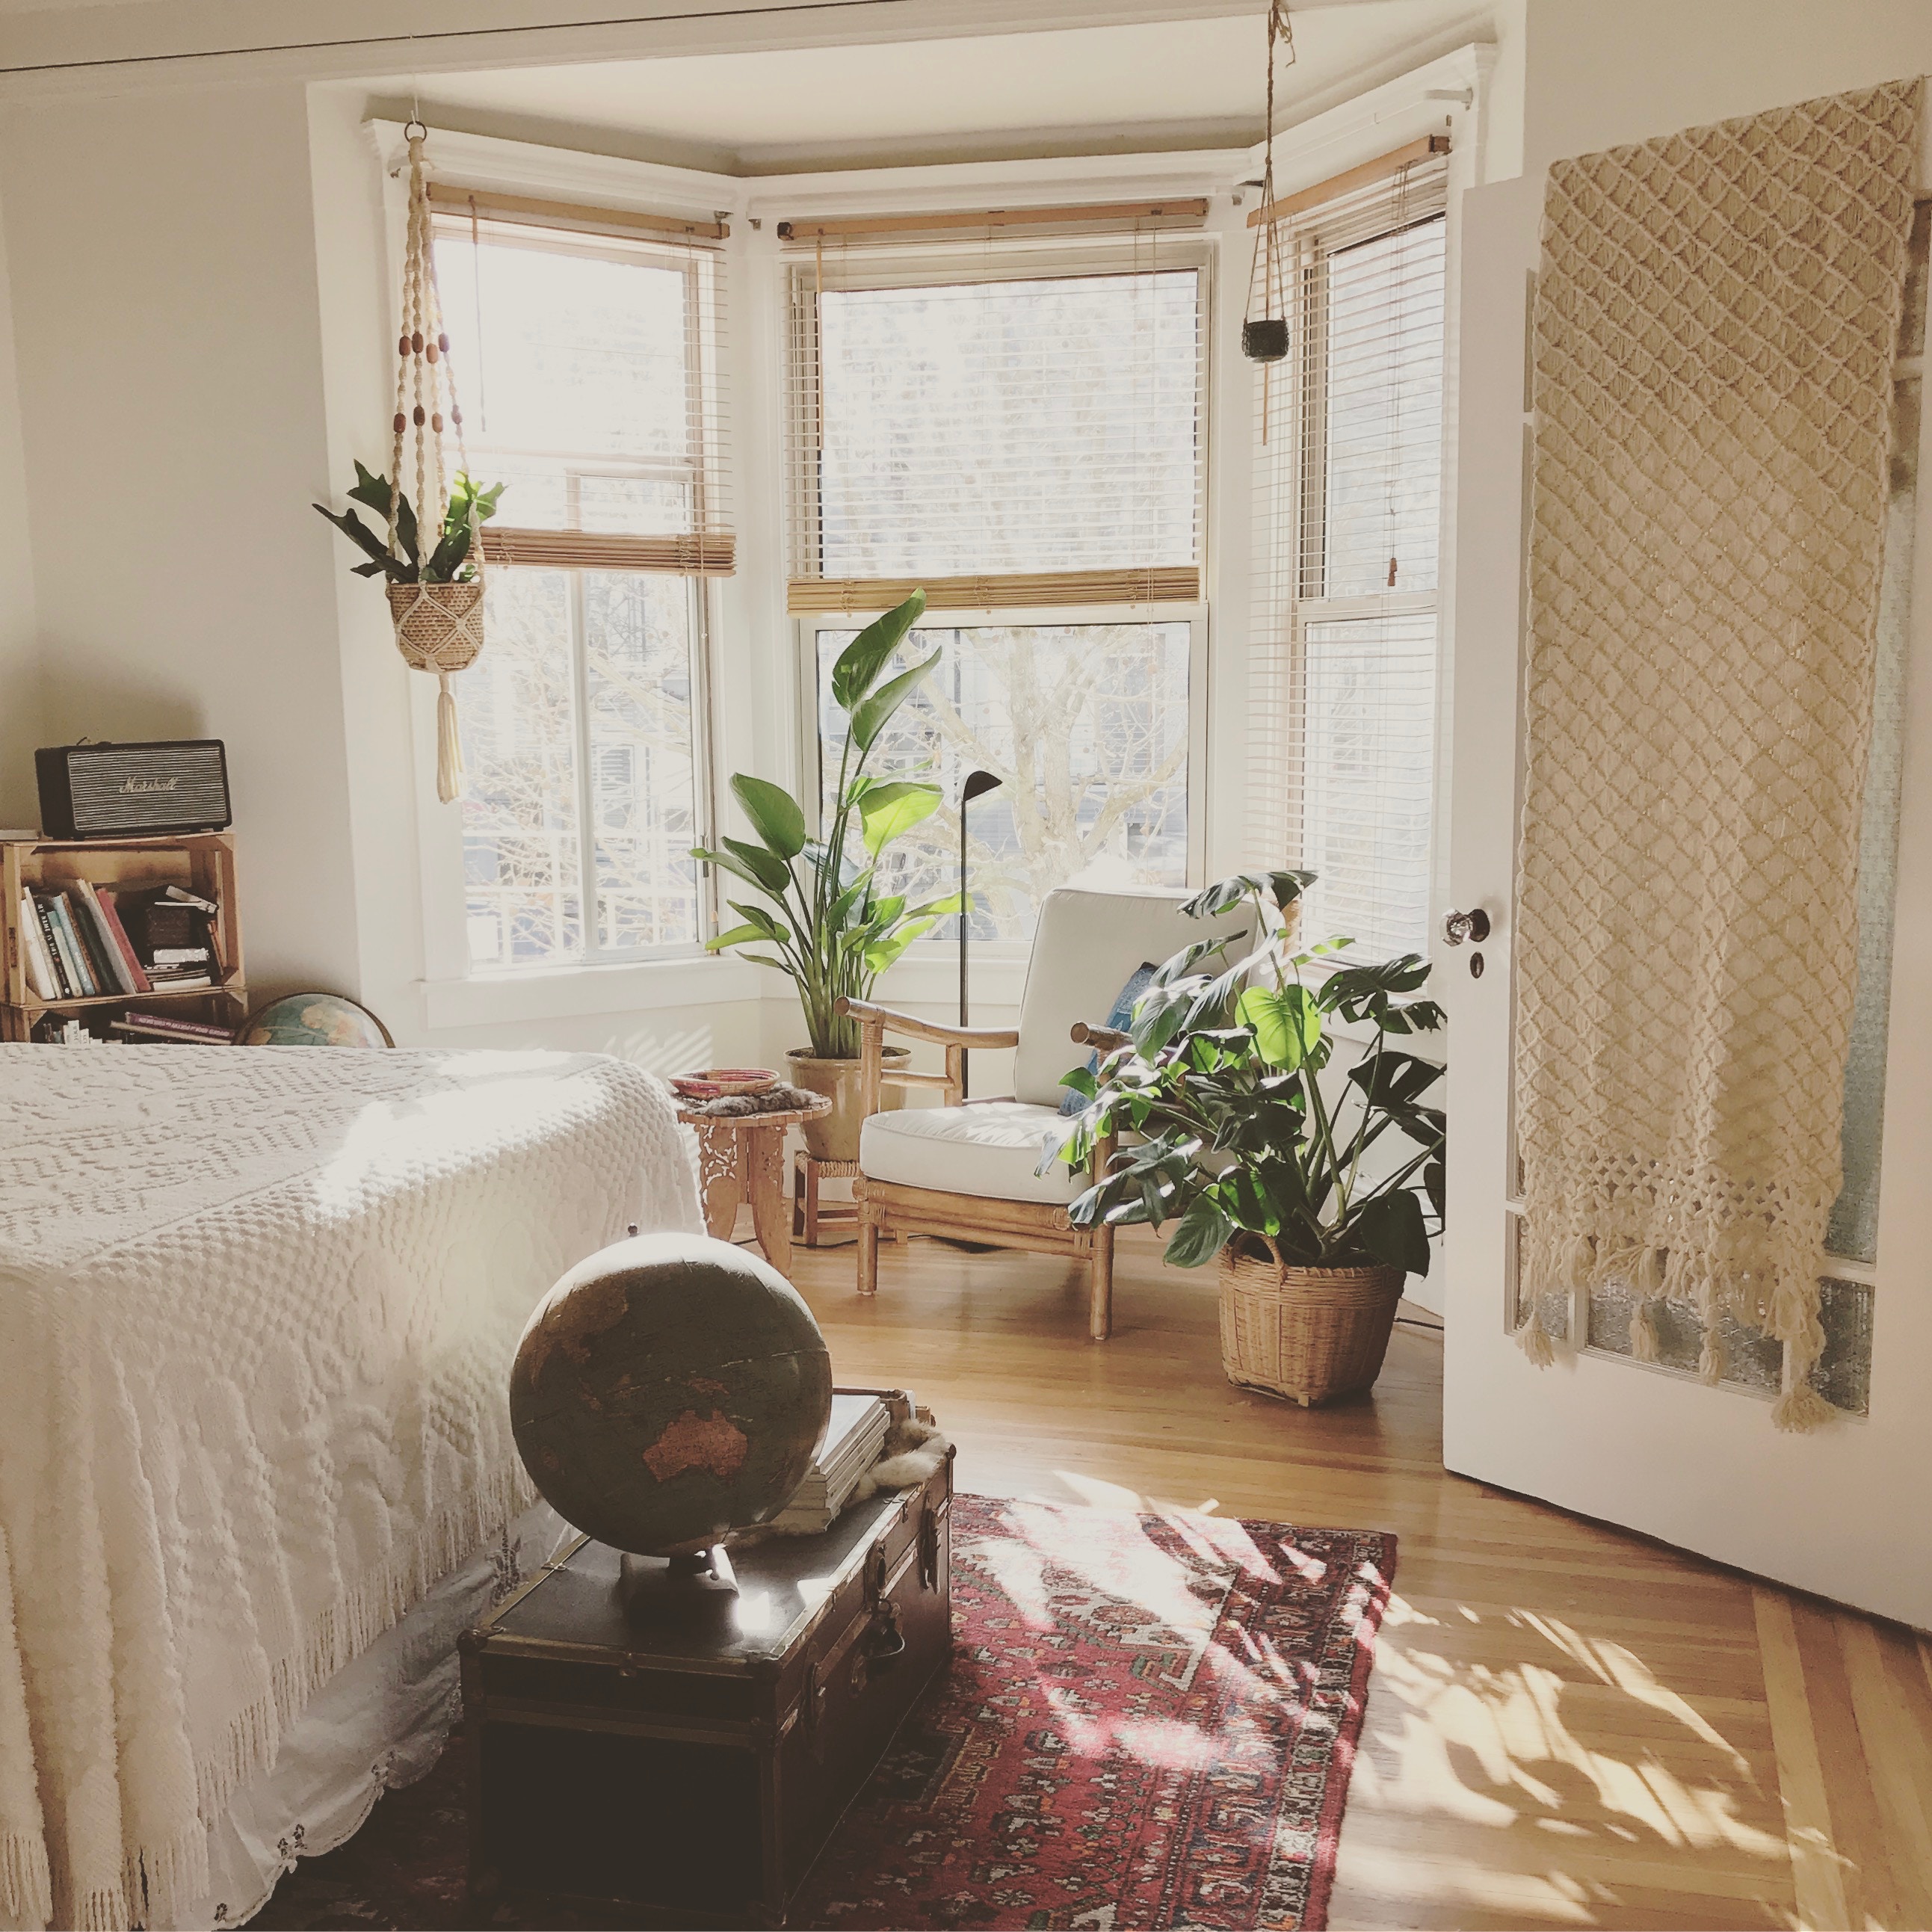 cute bedroom interior with plants